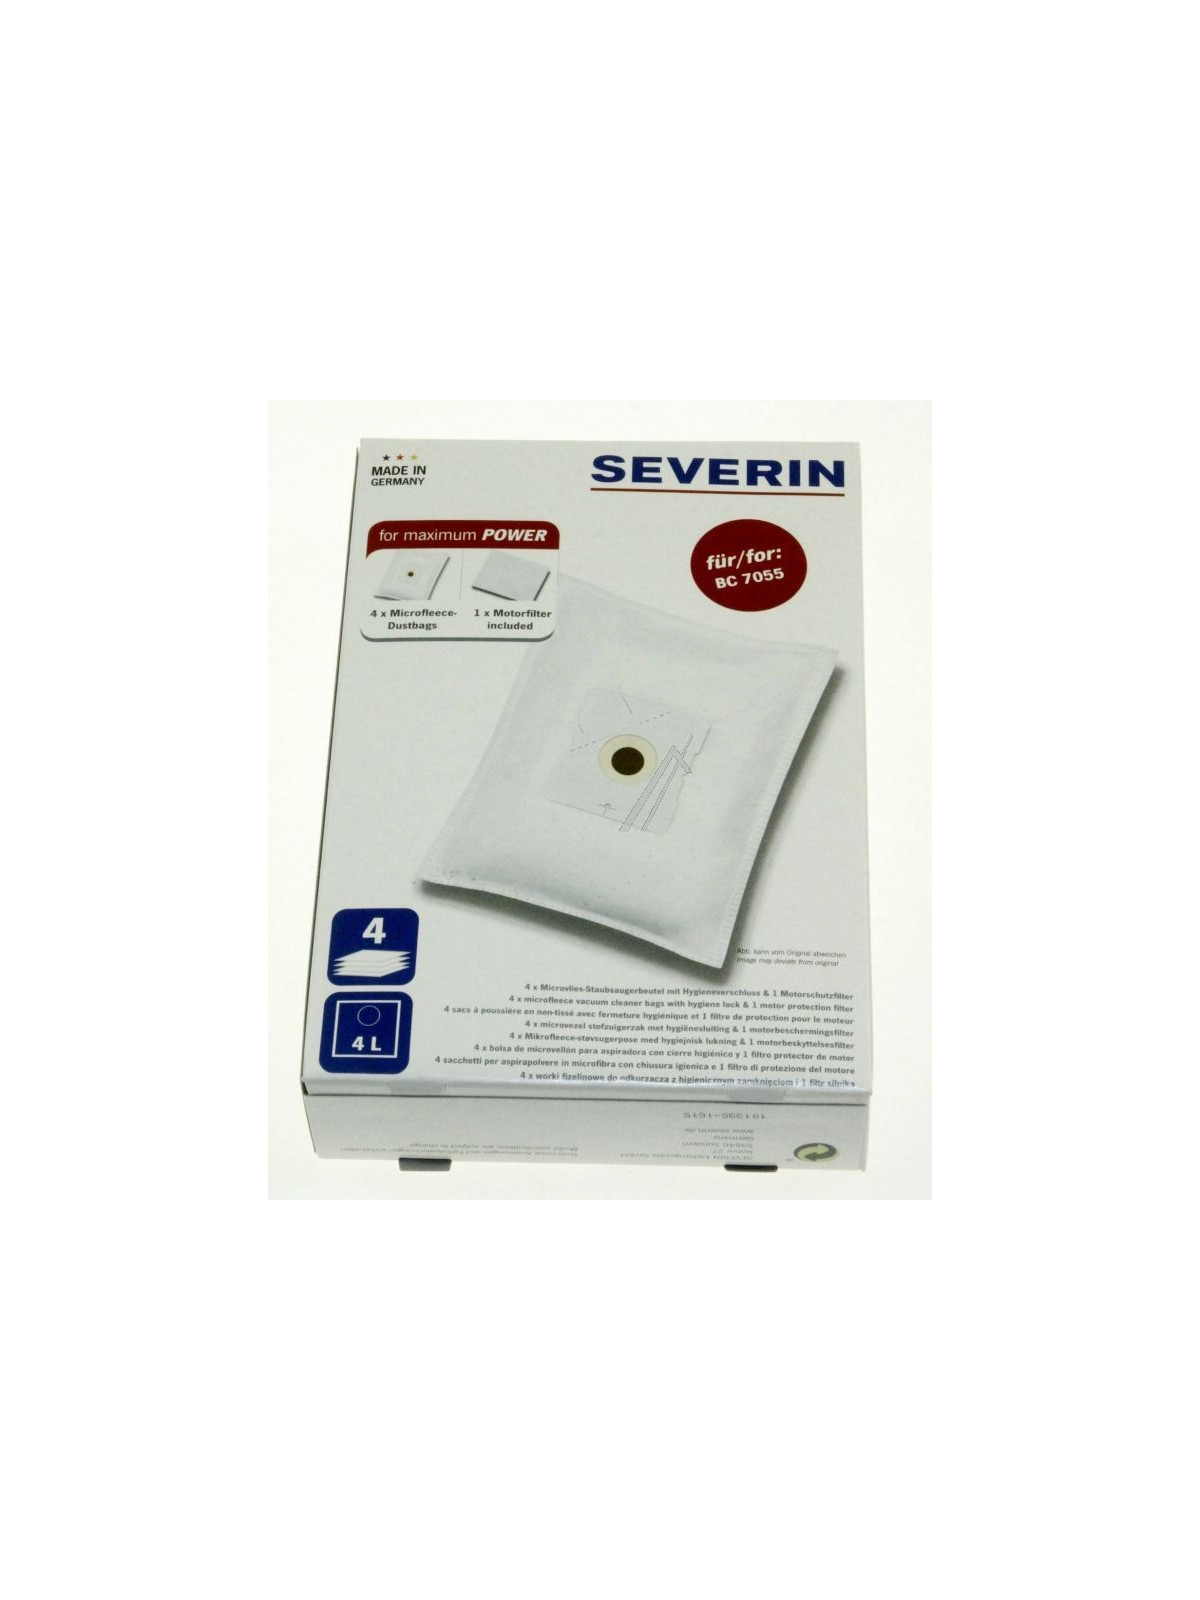 Sacs microfibres Severin S'Power BC7055 / BC7058 - Aspirateur